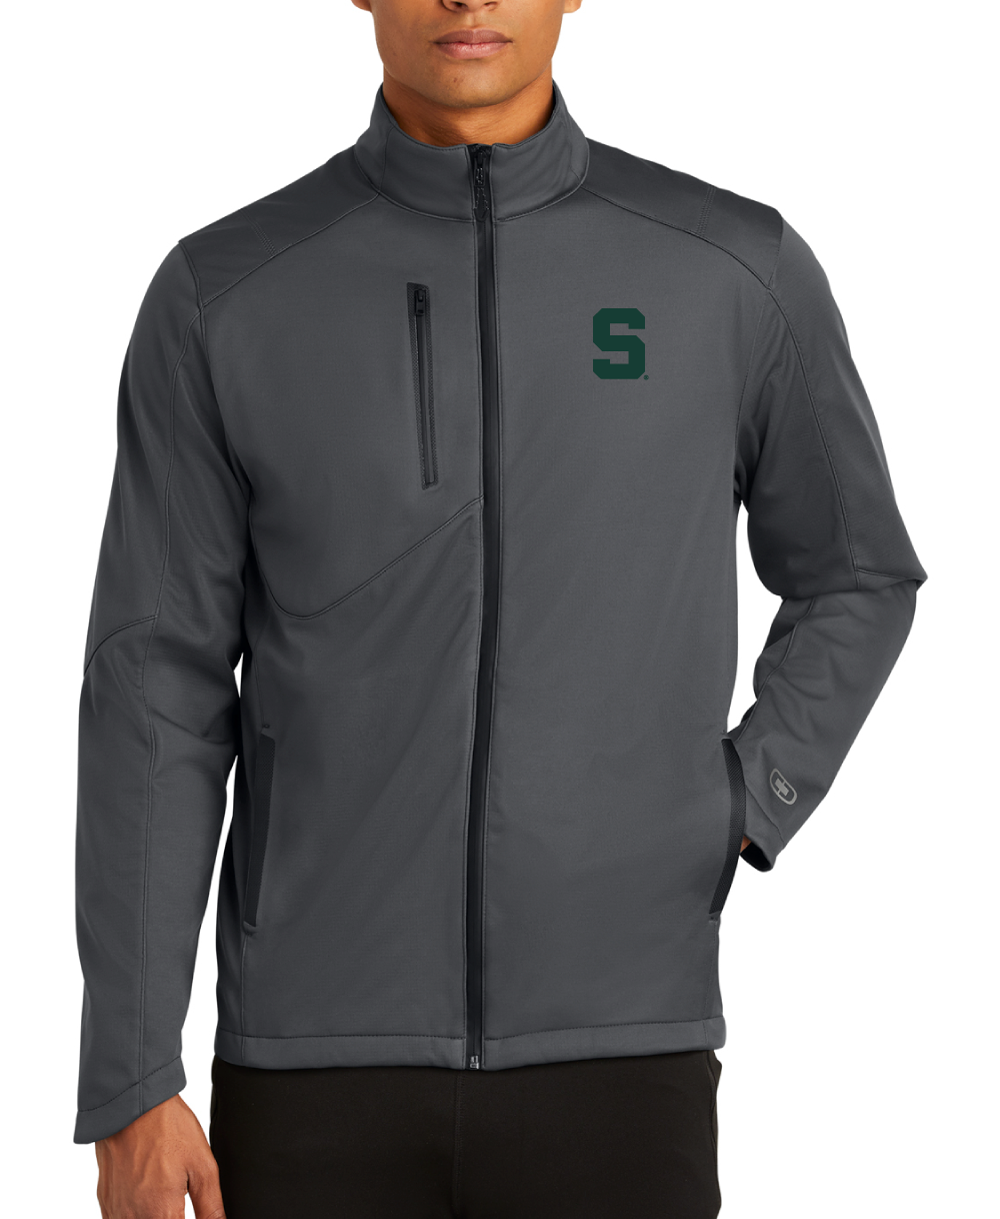 Grey Michigan State Jacket with Block S Logo